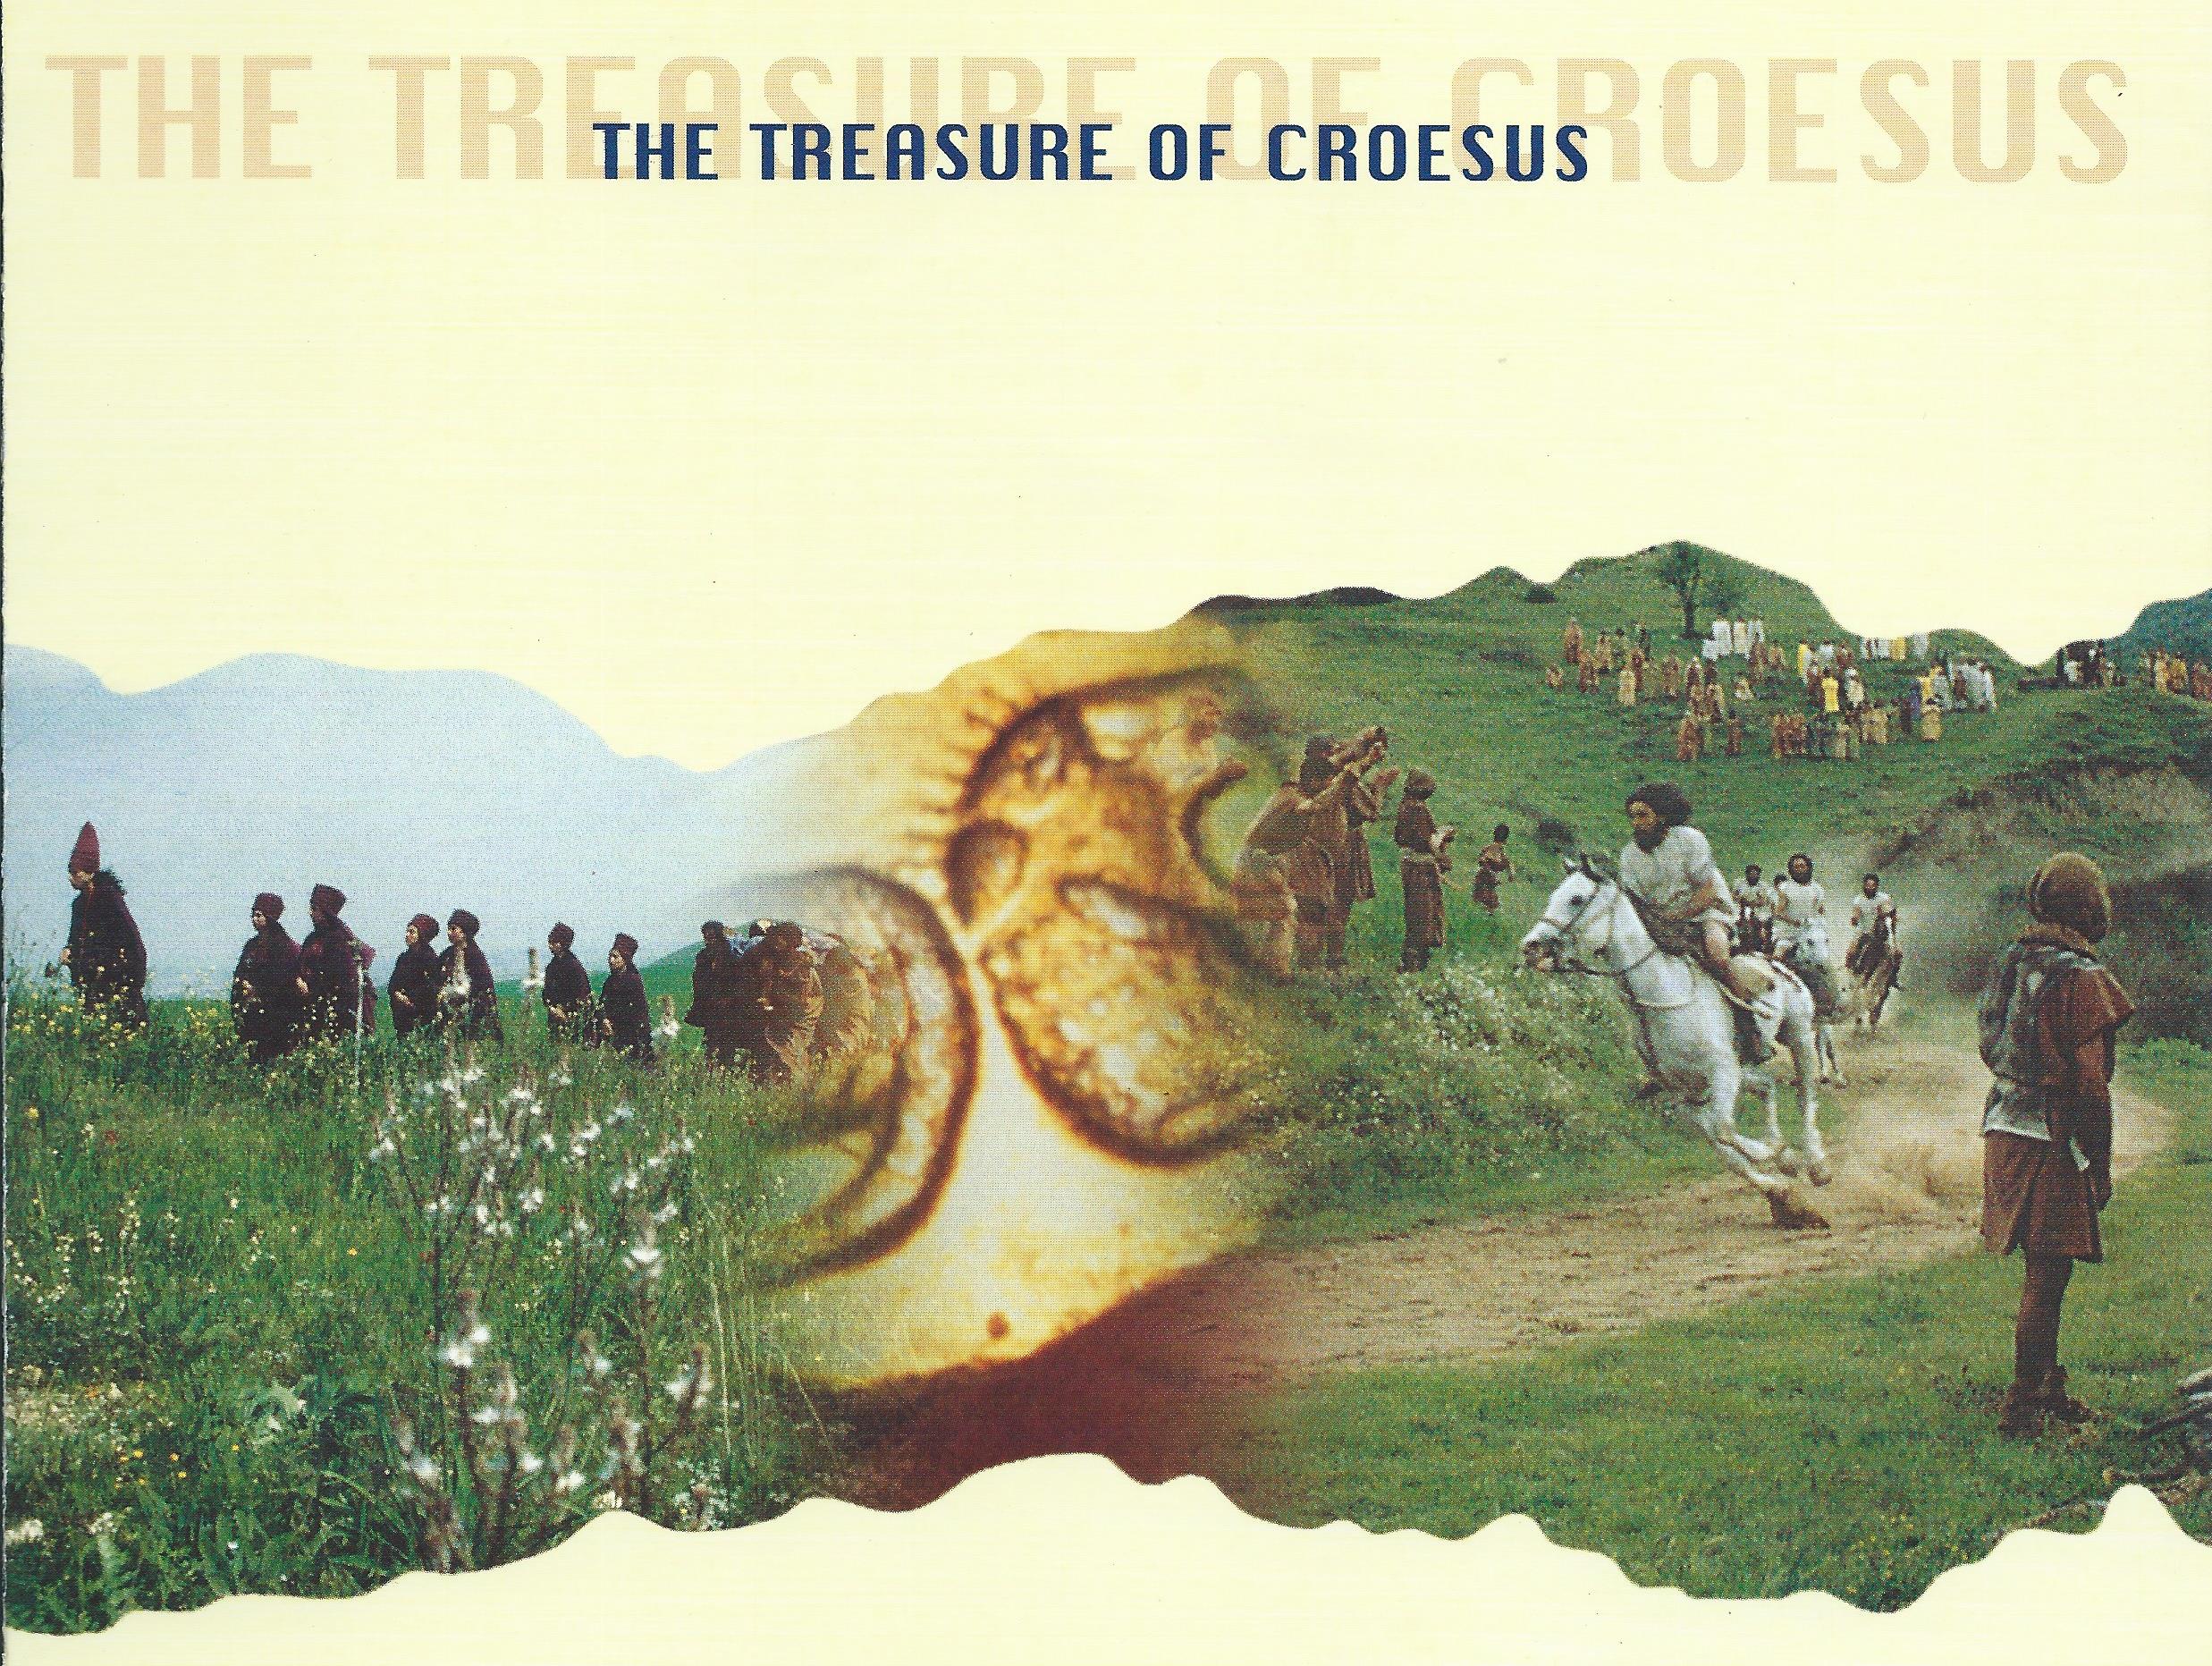 The treasure of Croesus